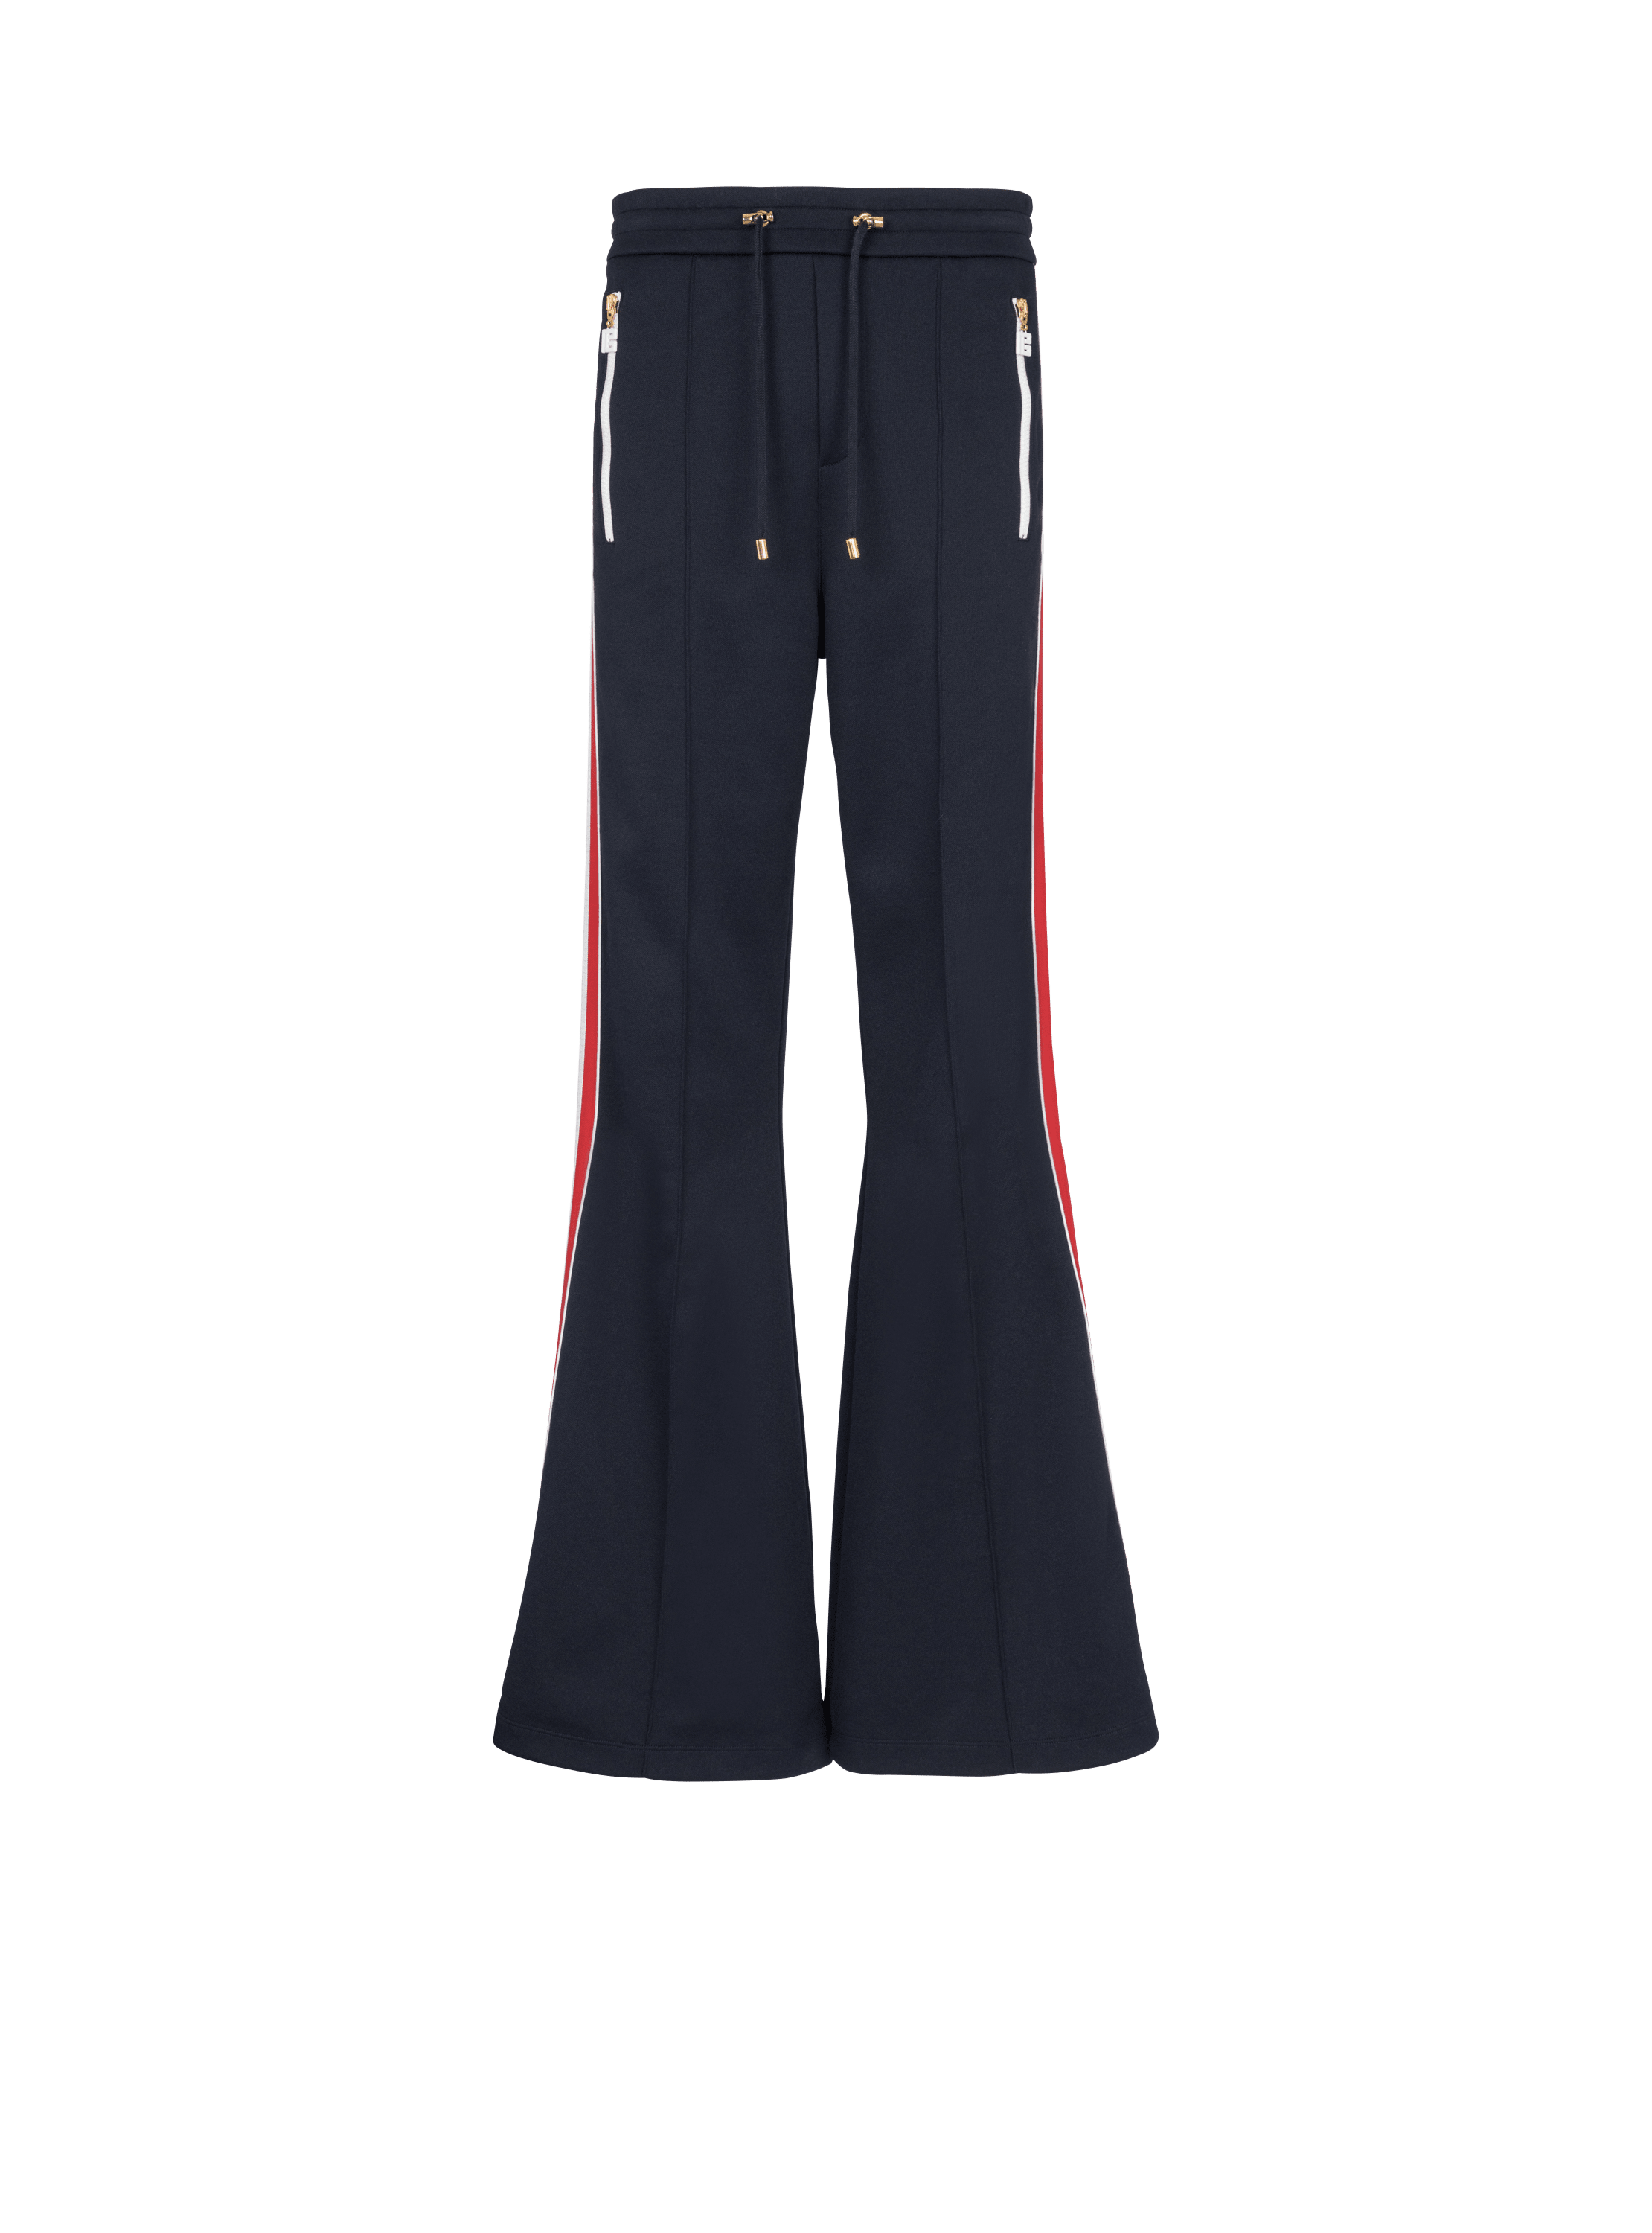 Pantaloni da jogging Balmain 70', blu scuro, hi-res